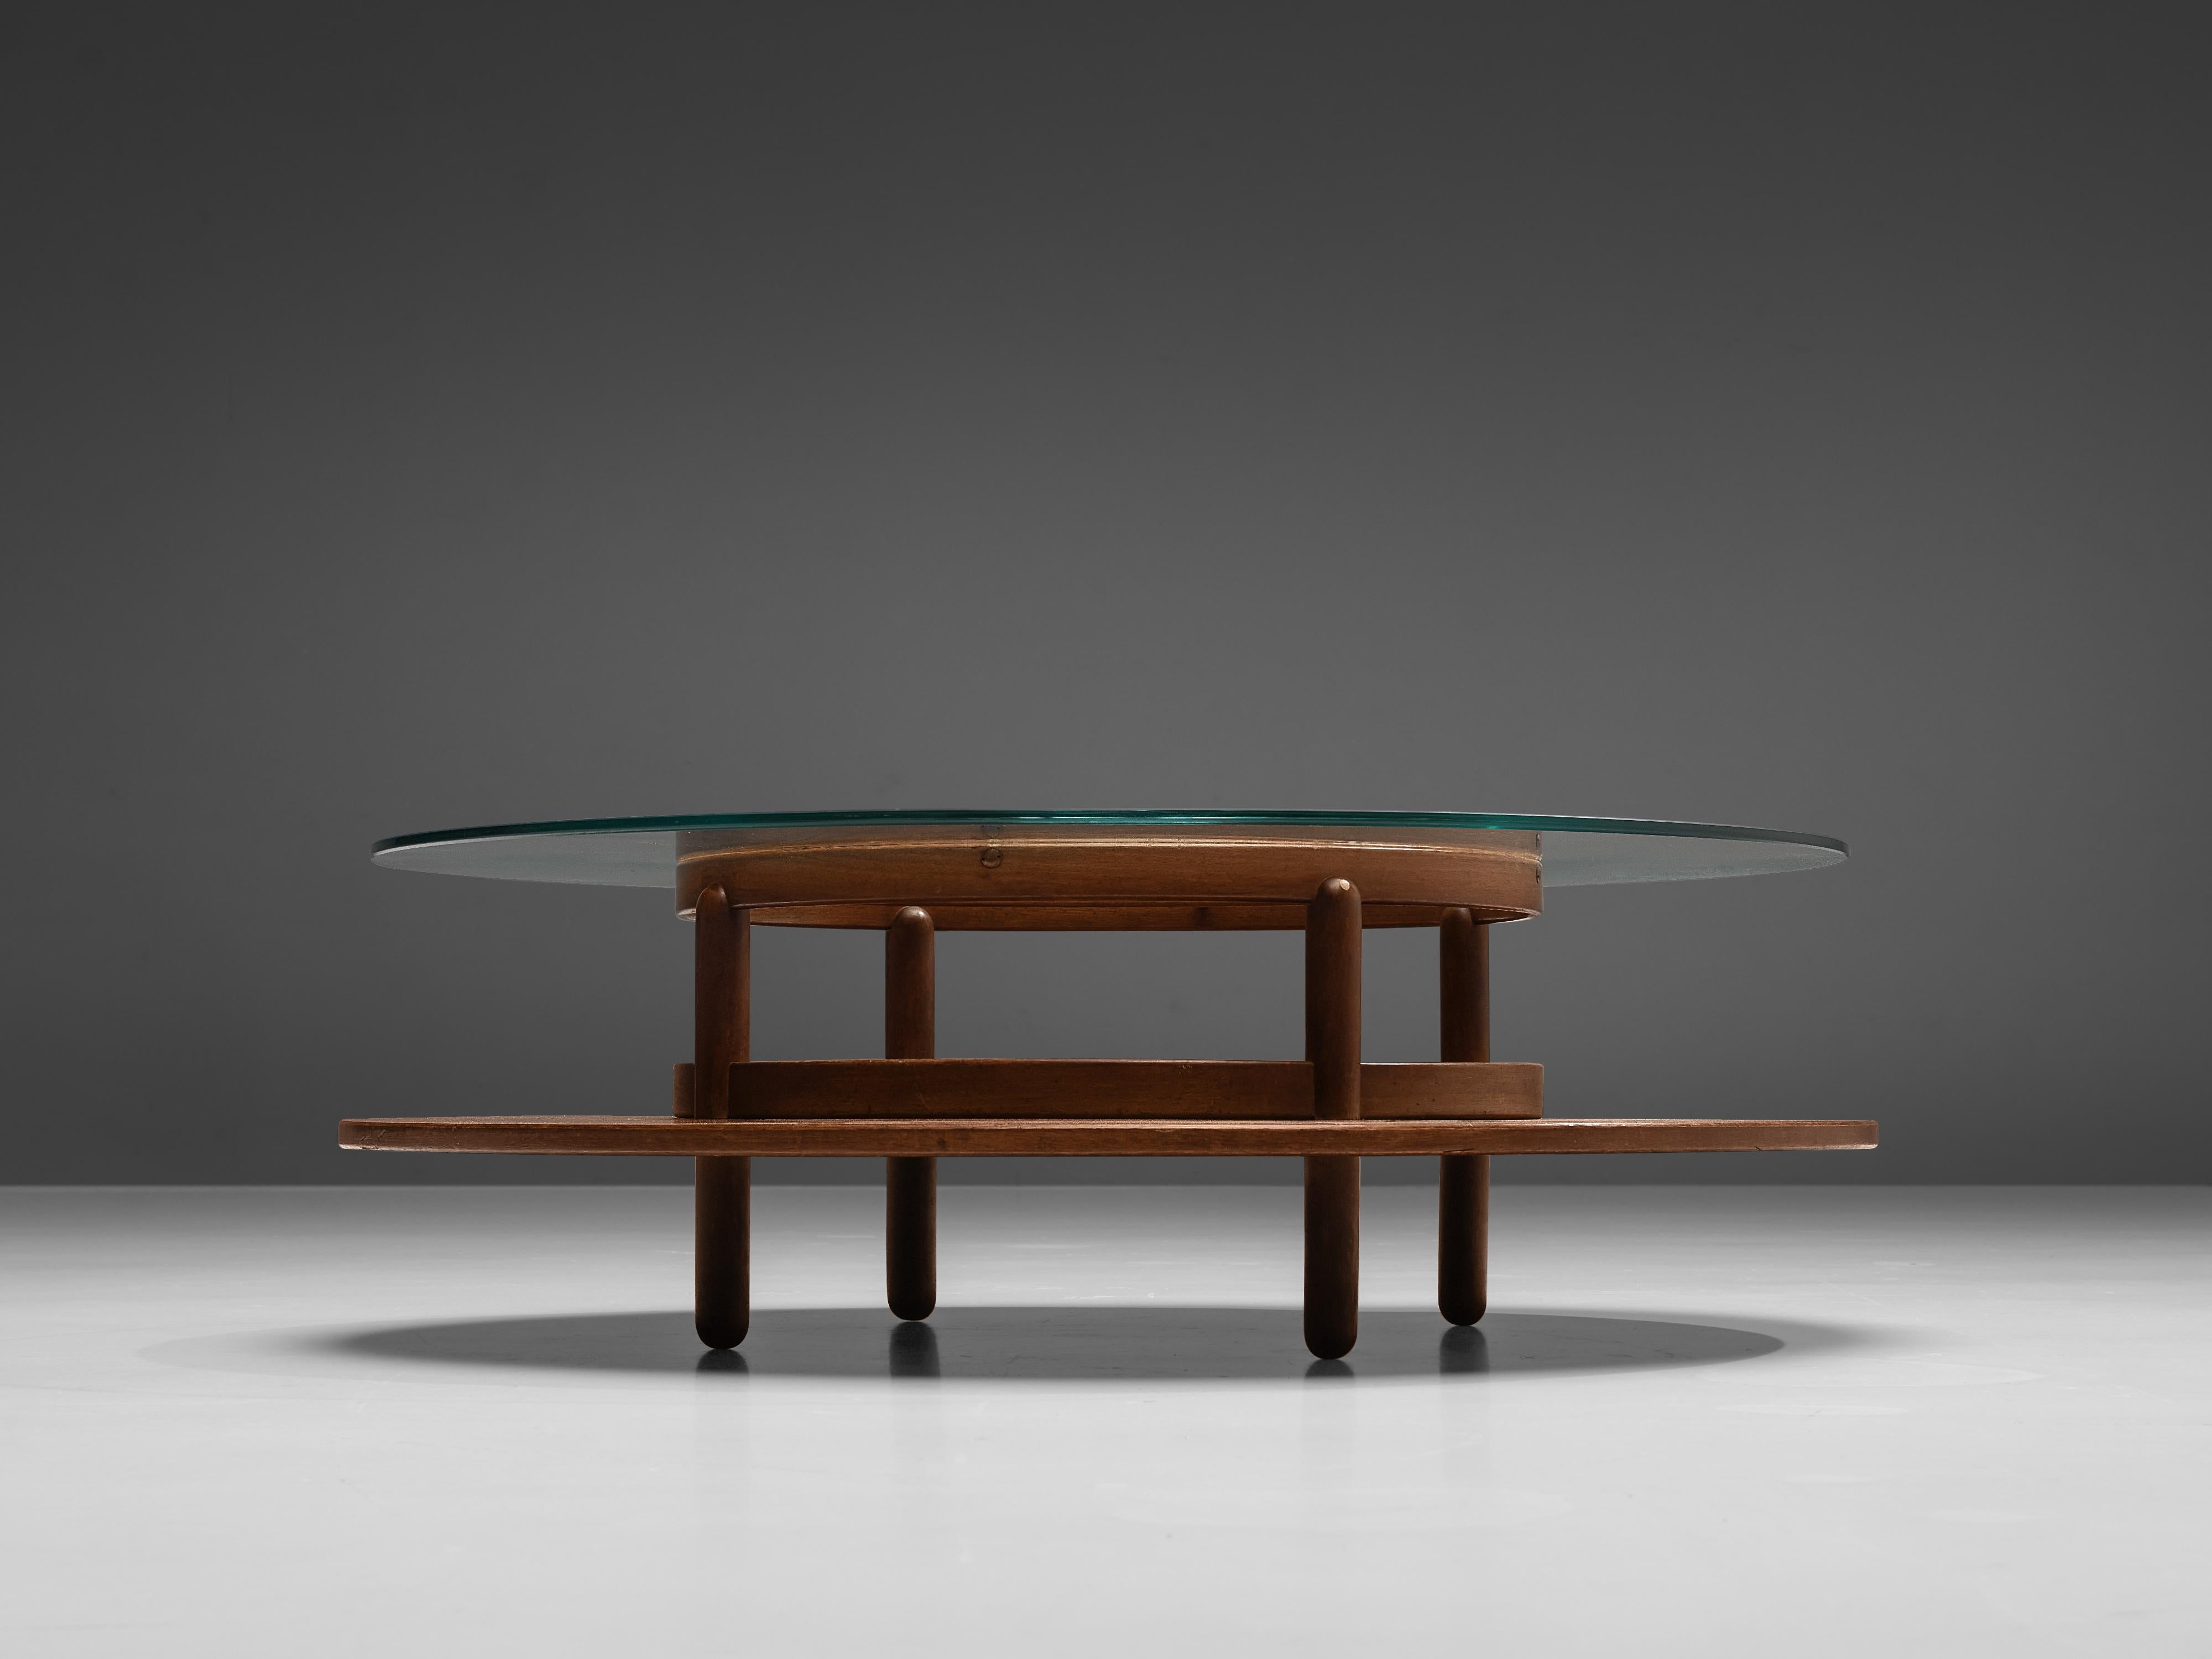 Gianfranco Frattini Round Coffee Table in Walnut and Glass